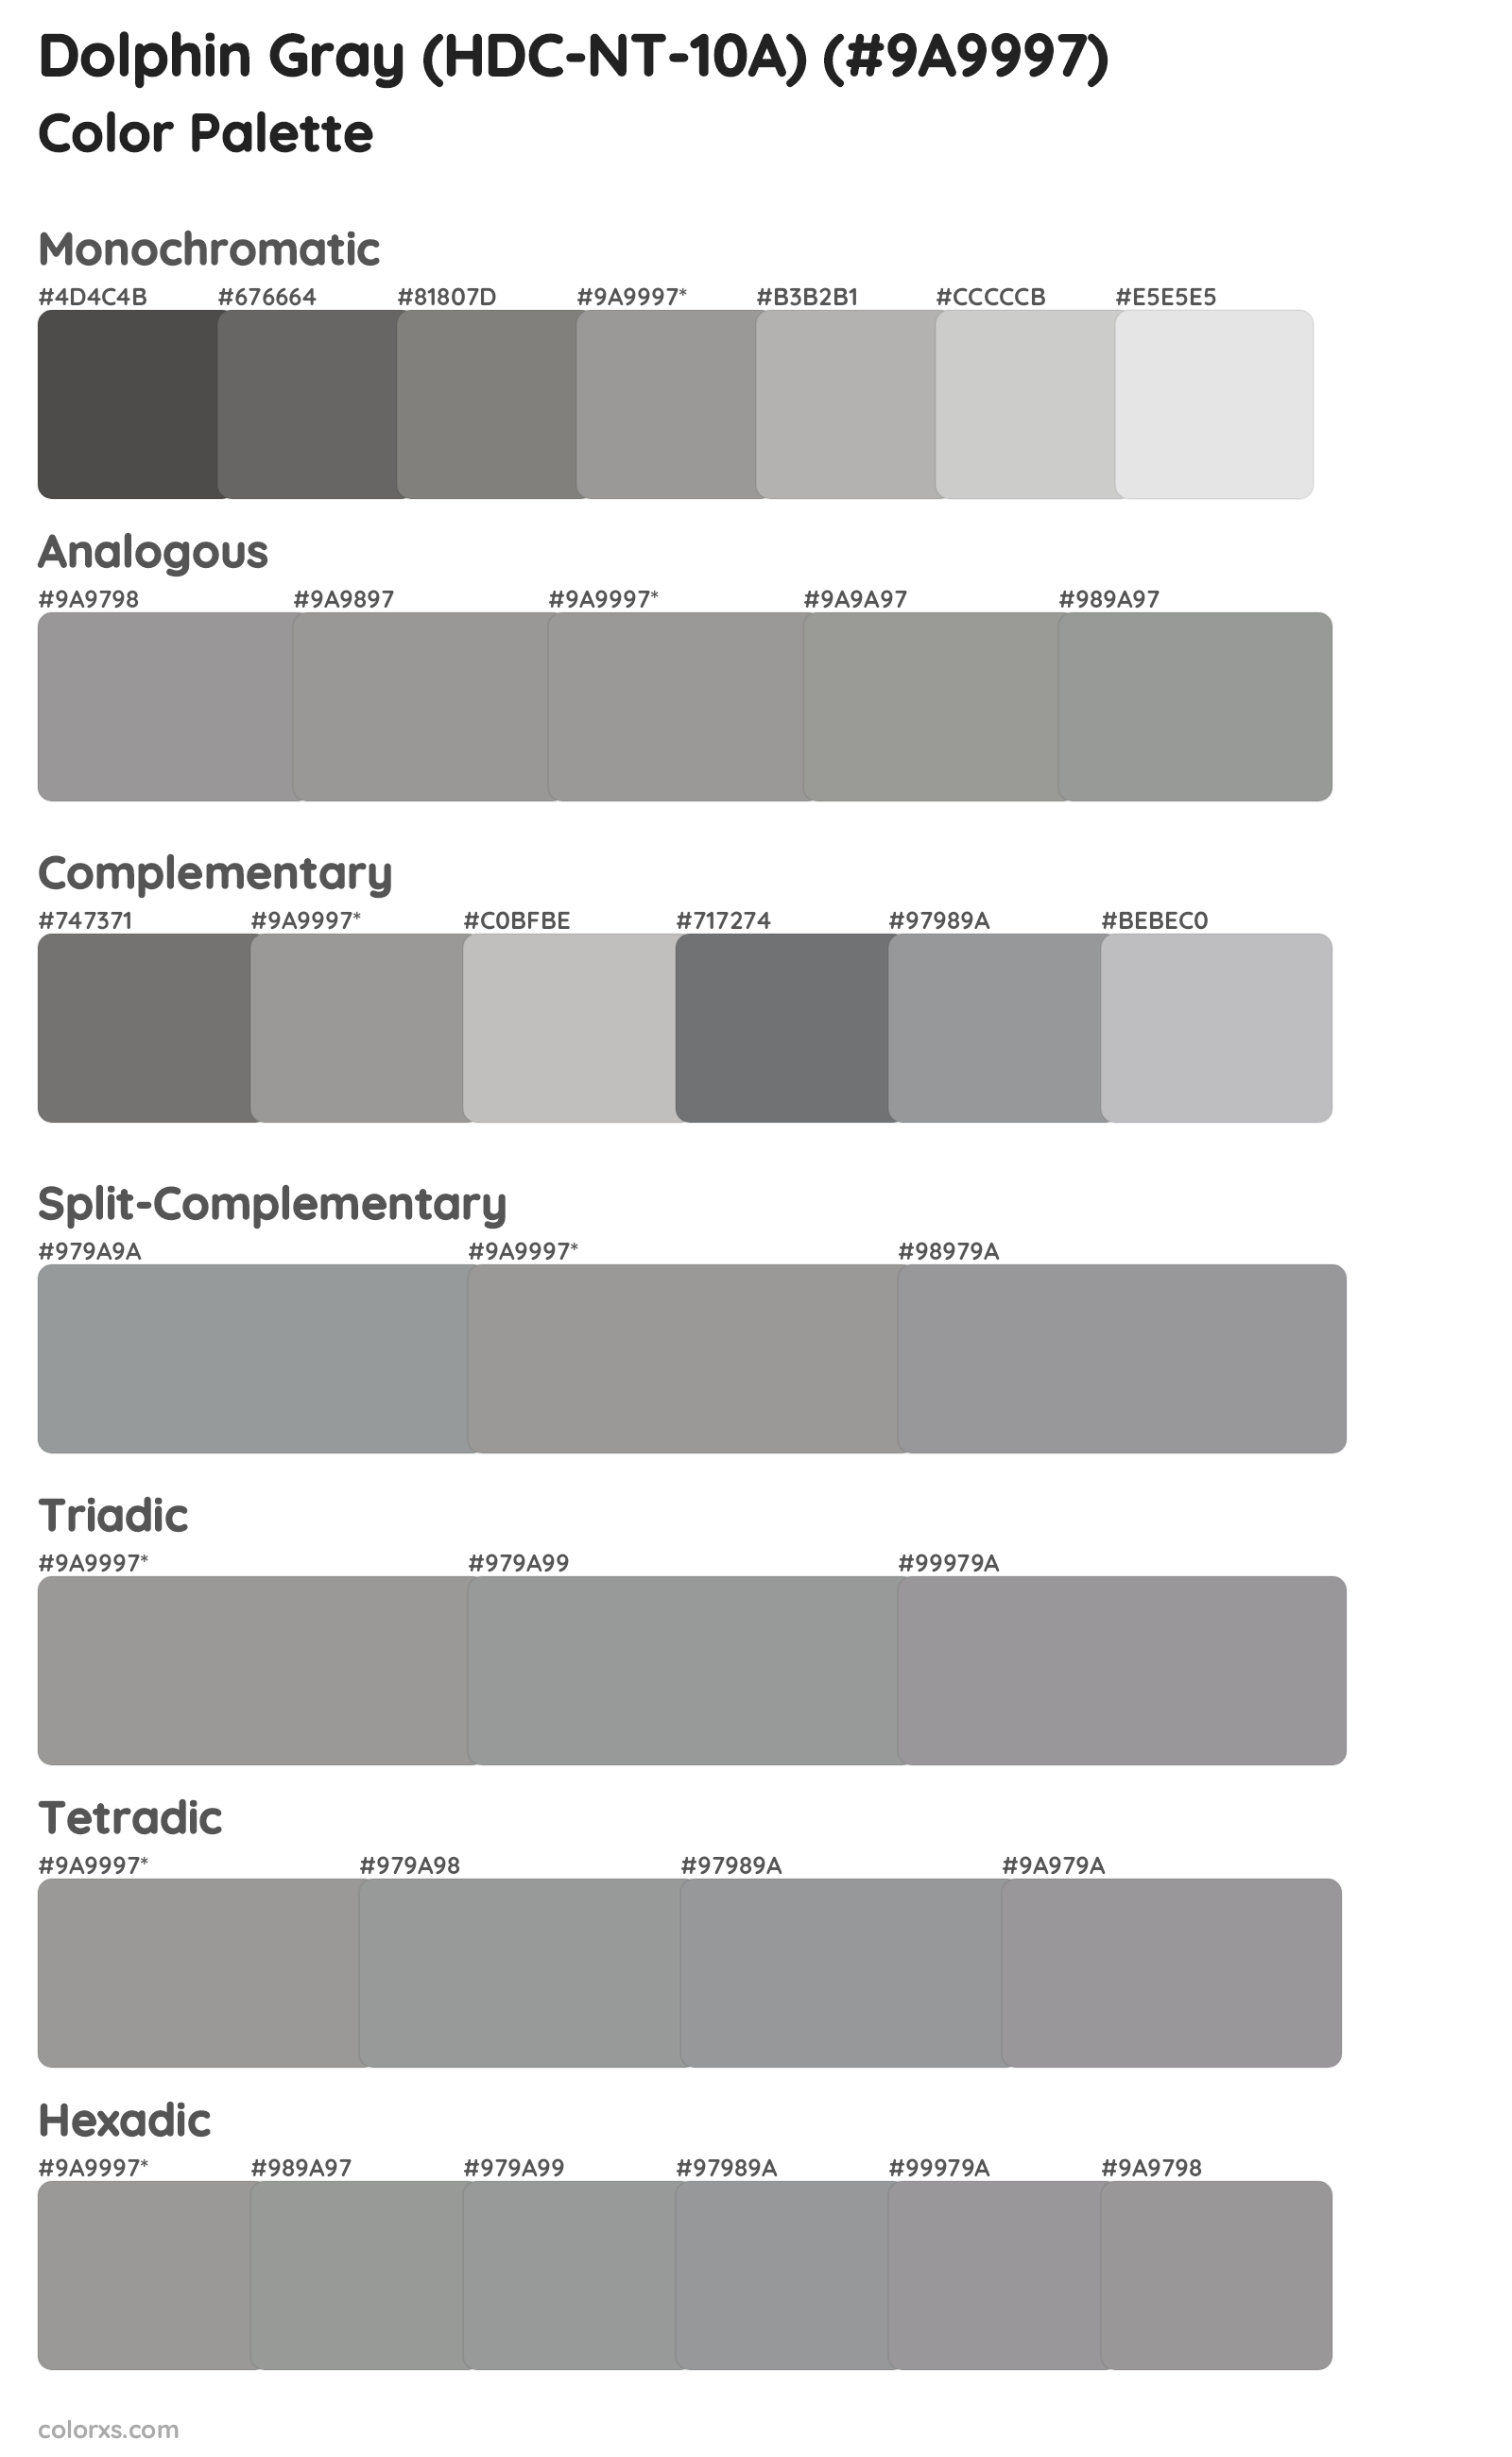 Dolphin Gray (HDC-NT-10A) Color Scheme Palettes